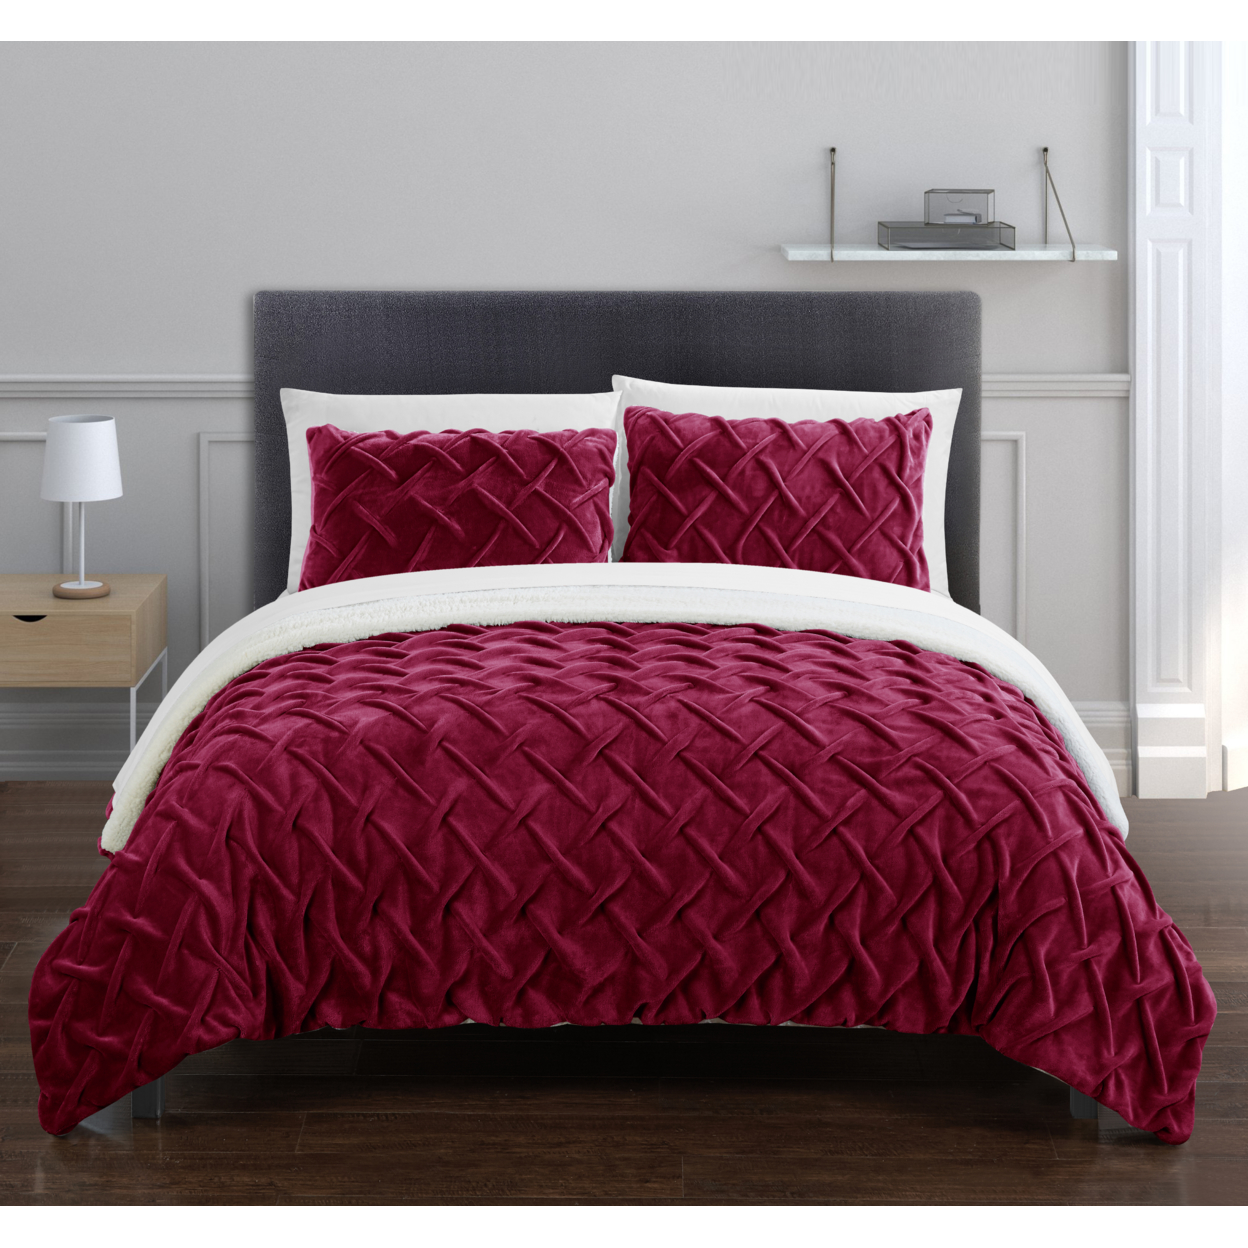 Thirsa 3 Or 2 Piece Comforter Set Ultra Plush Micro Mink Criss Cross Pinch Pleat Sherpa Lined Bedding - Beige, Queen